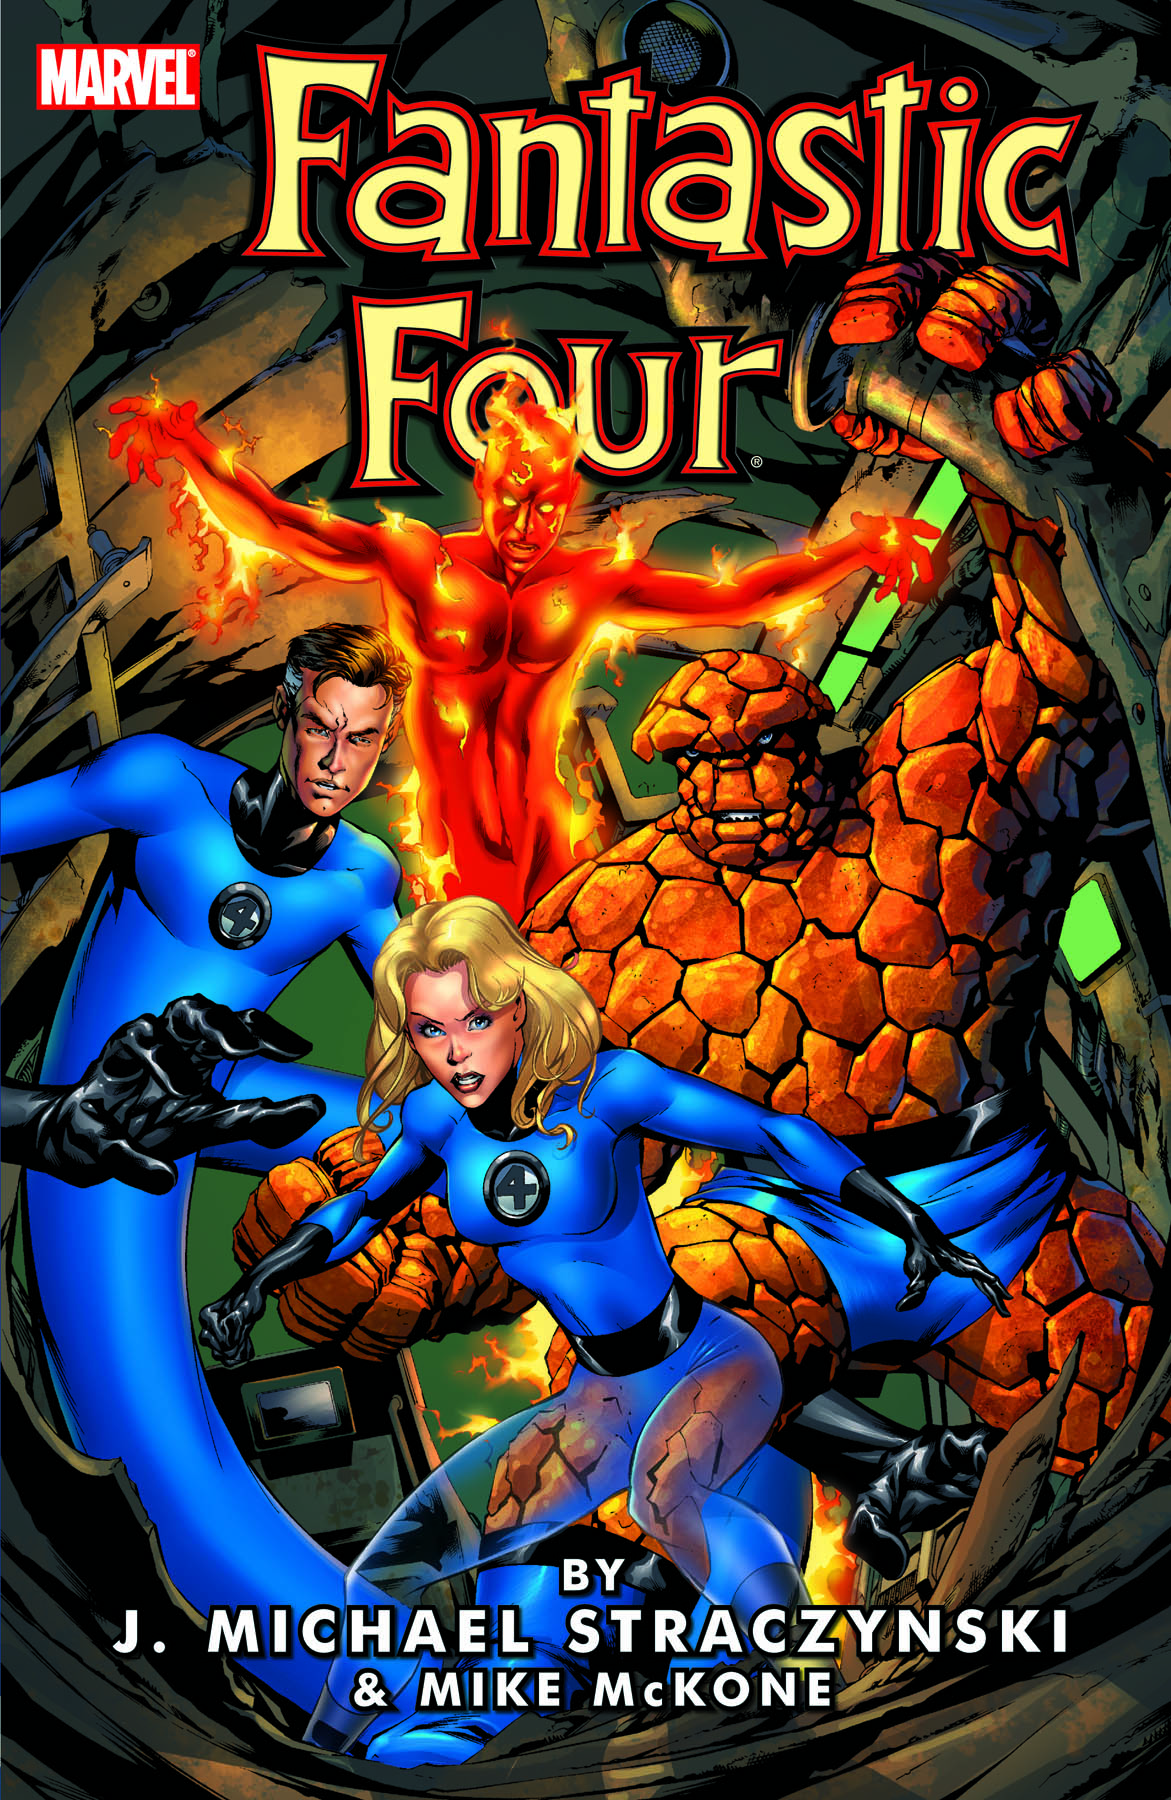 Fantastic Four by J. Michael Straczynski Vol. 1 (Trade Paperback)